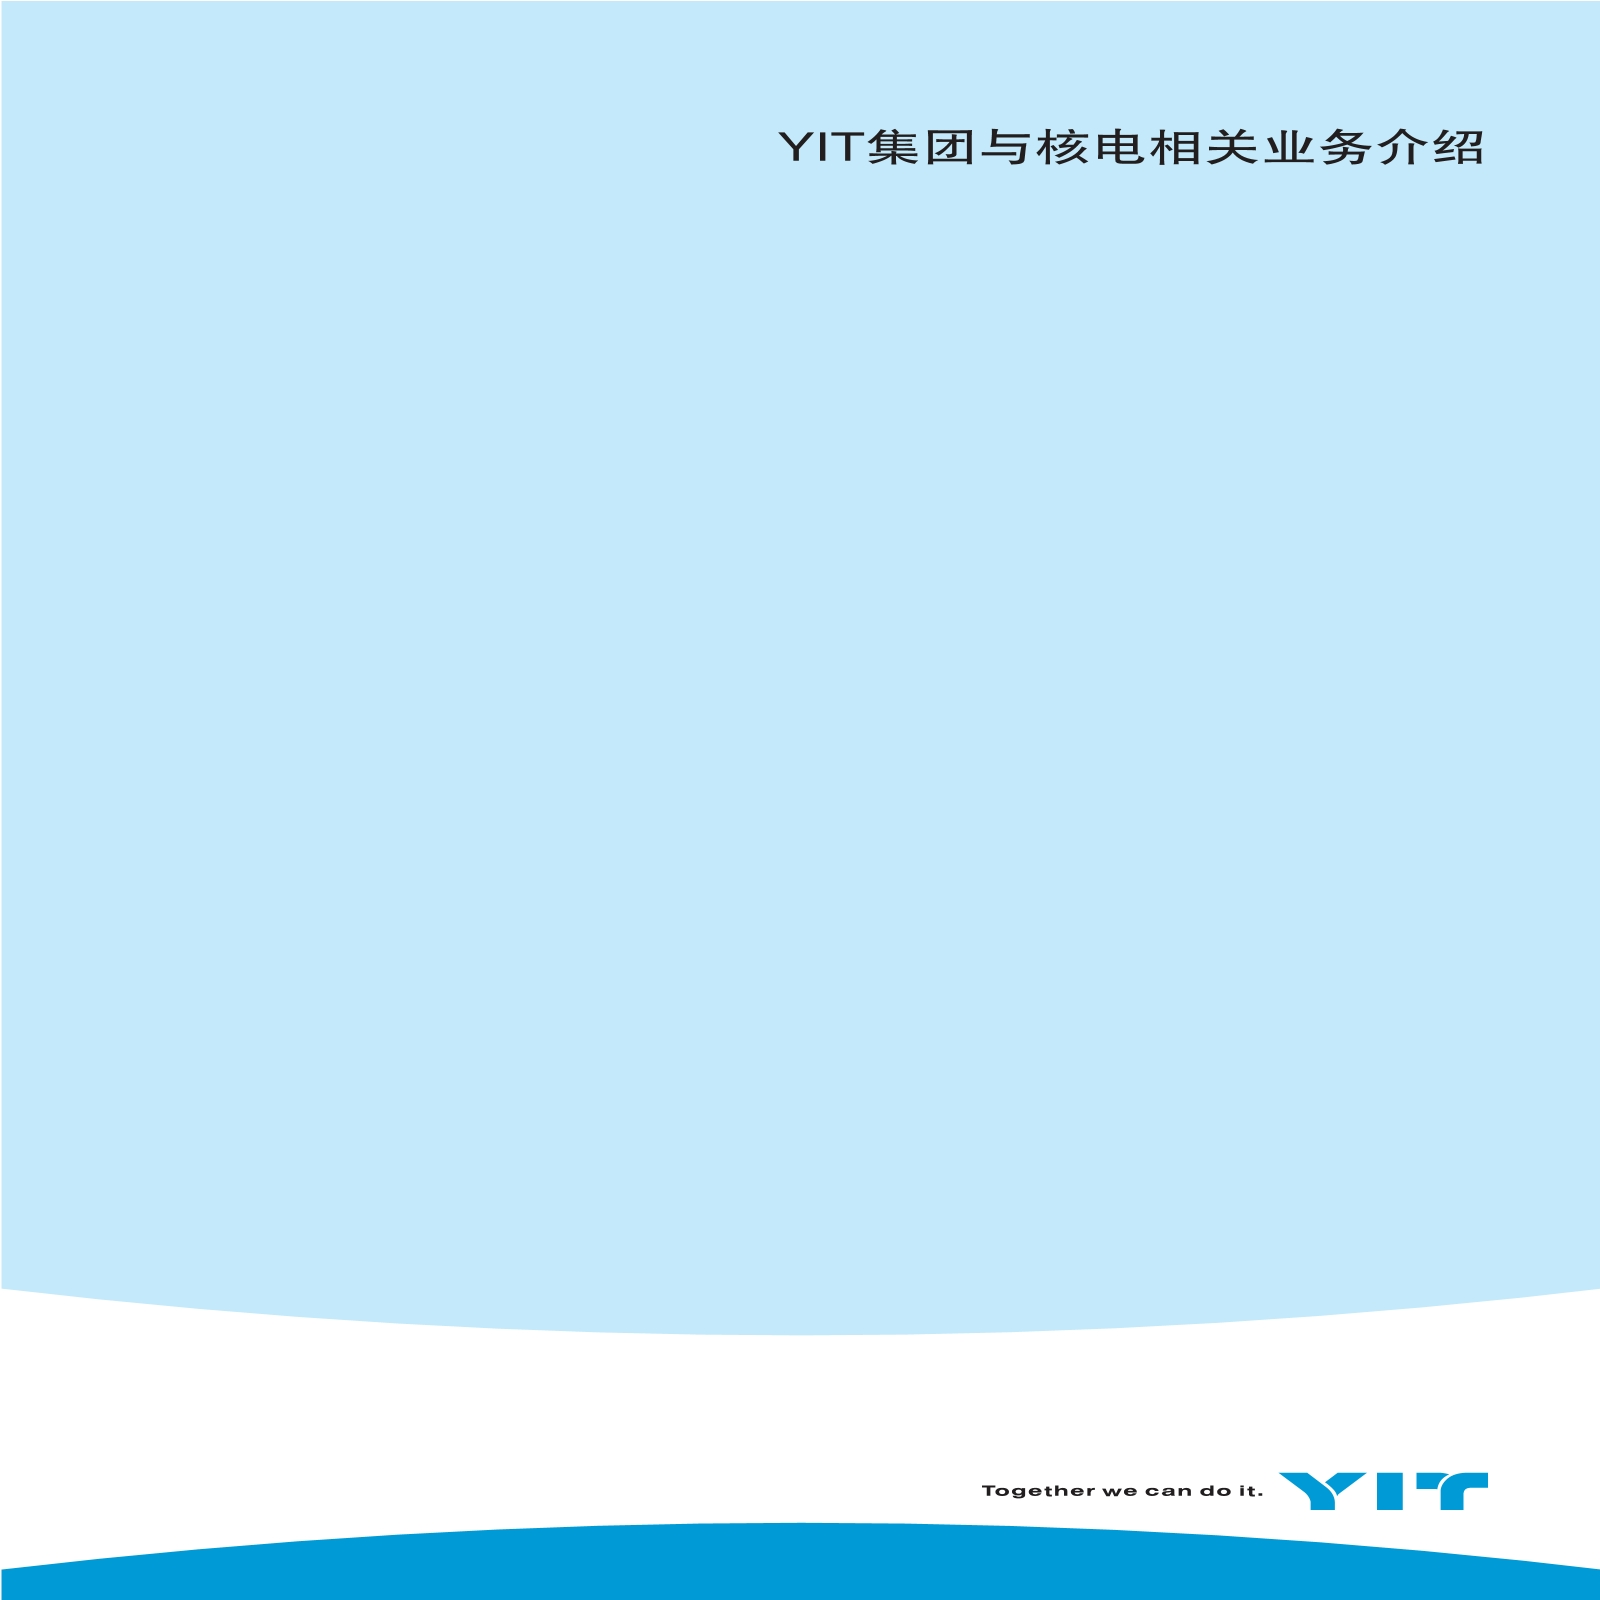 YIT集团与核电相关业务介绍